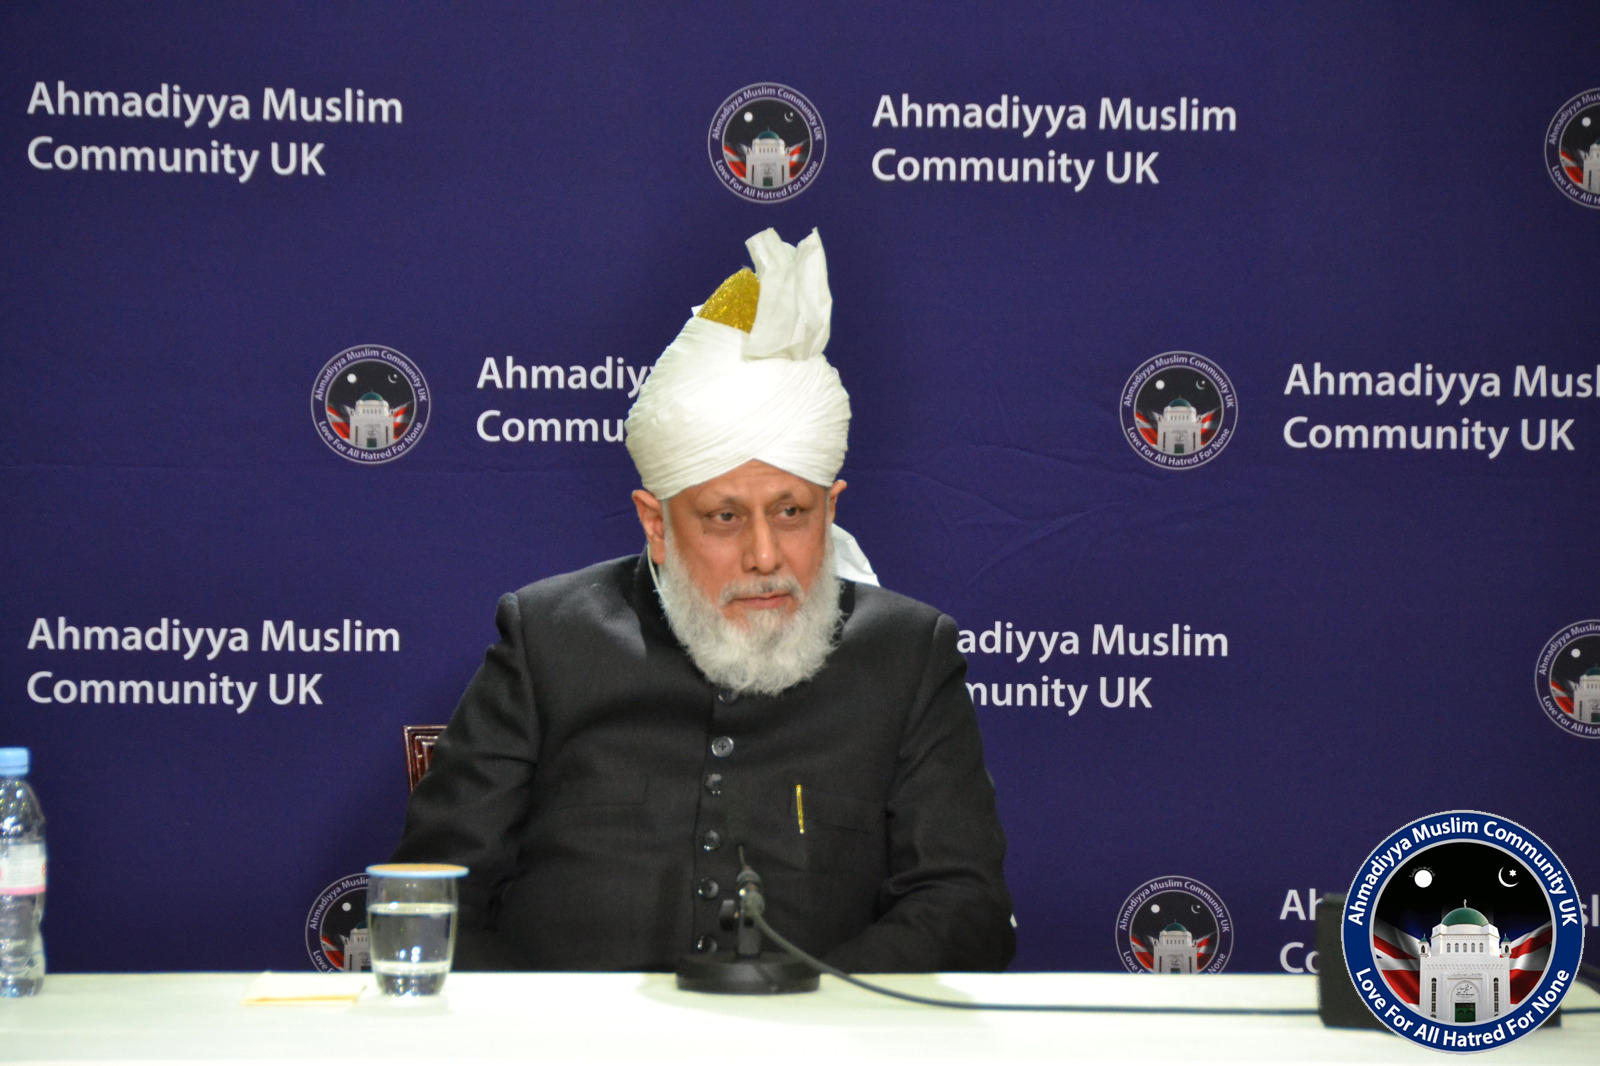 Ahmadiyya Muslim community leader calls for unity at National Peace Symposium